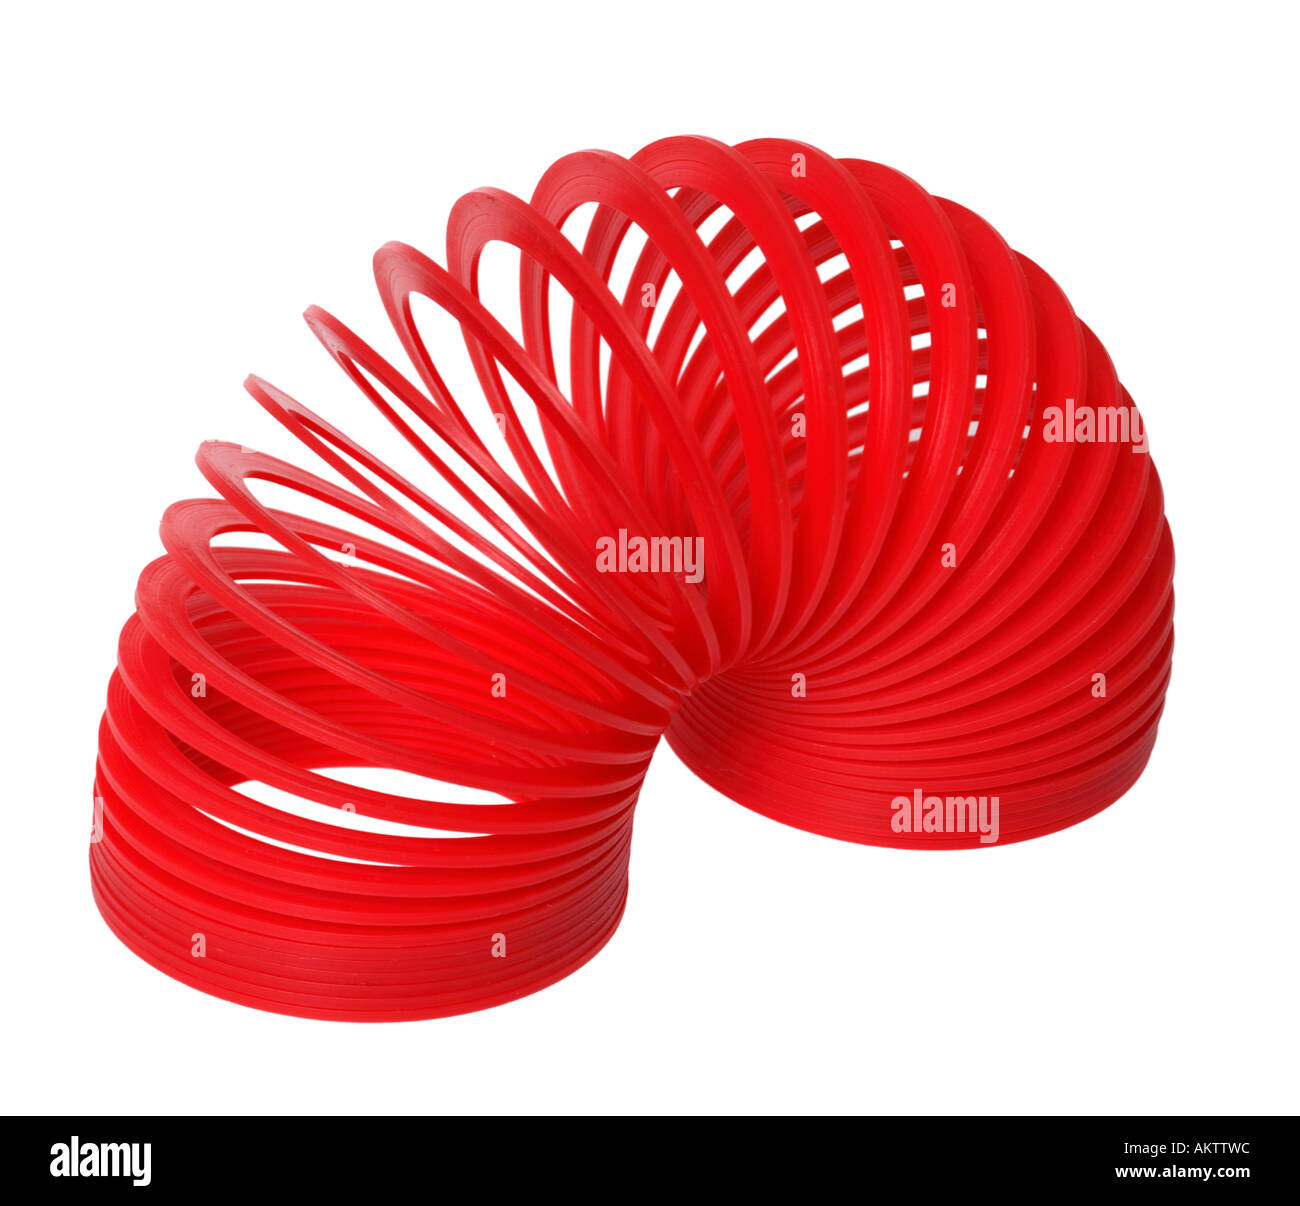 Slinky Toy Stock Photo